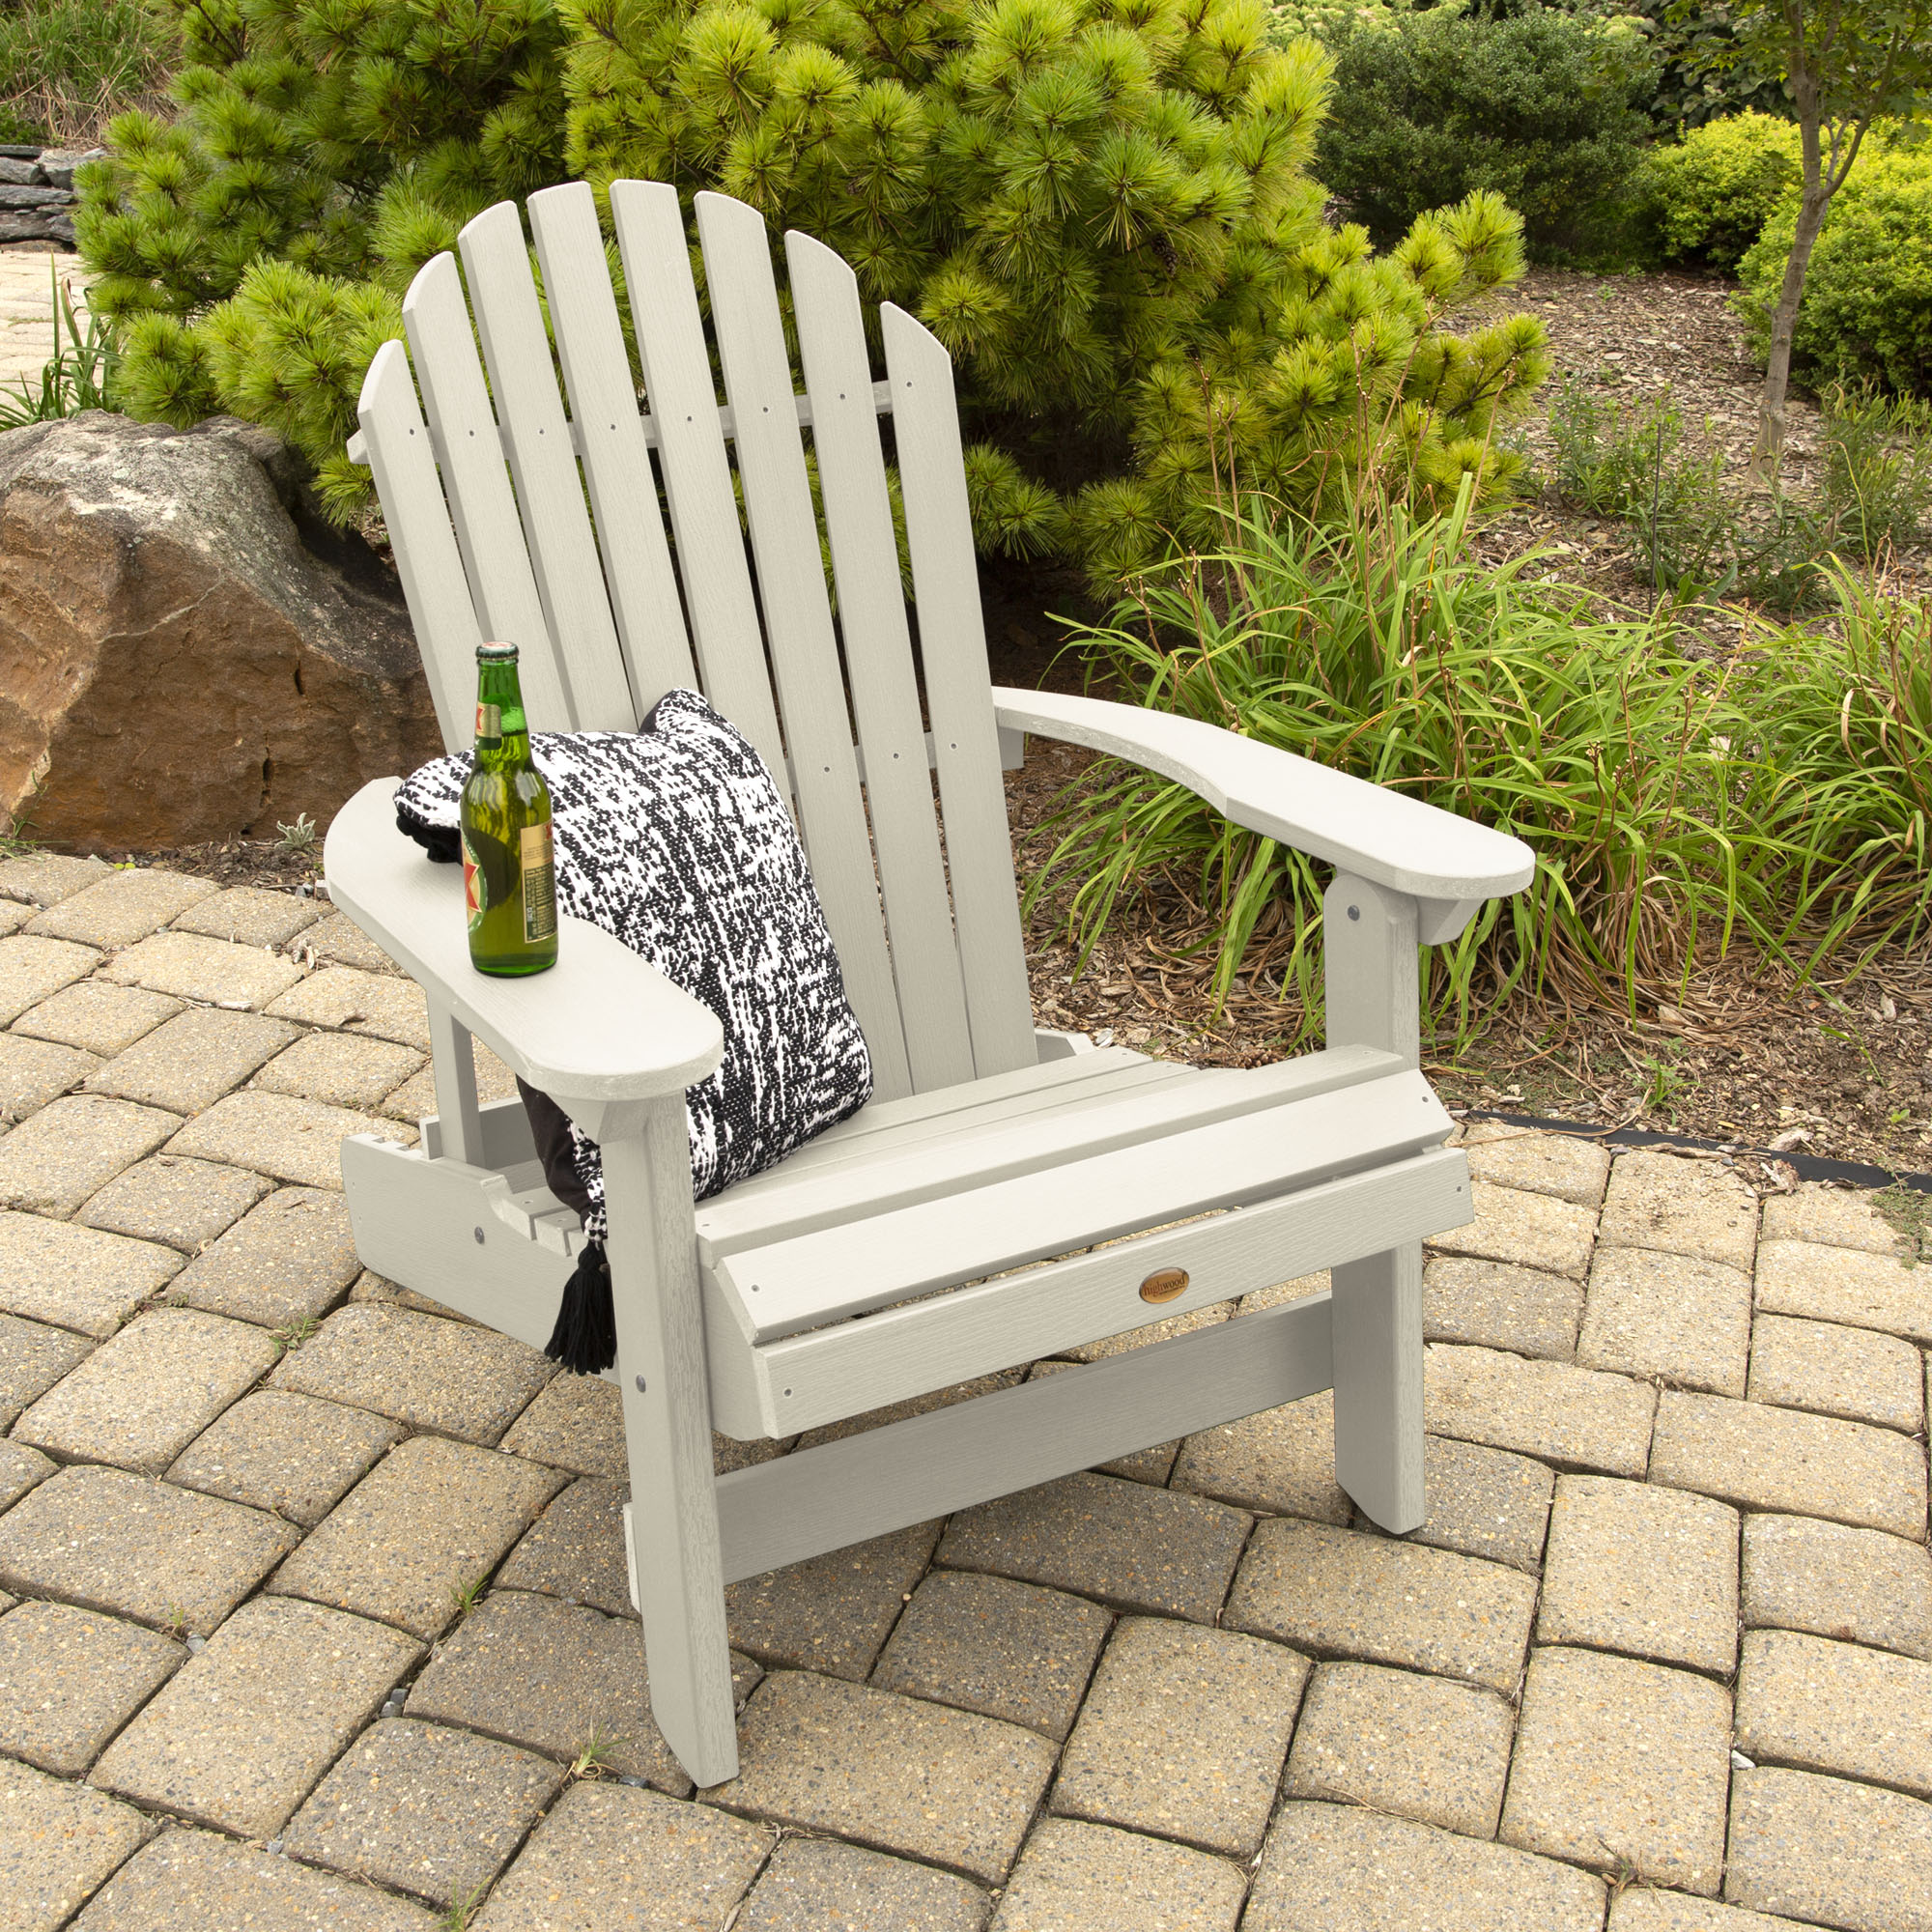 Highwood's Folding & Reclining King Hamilton Adirondack Chair - image 2 of 5